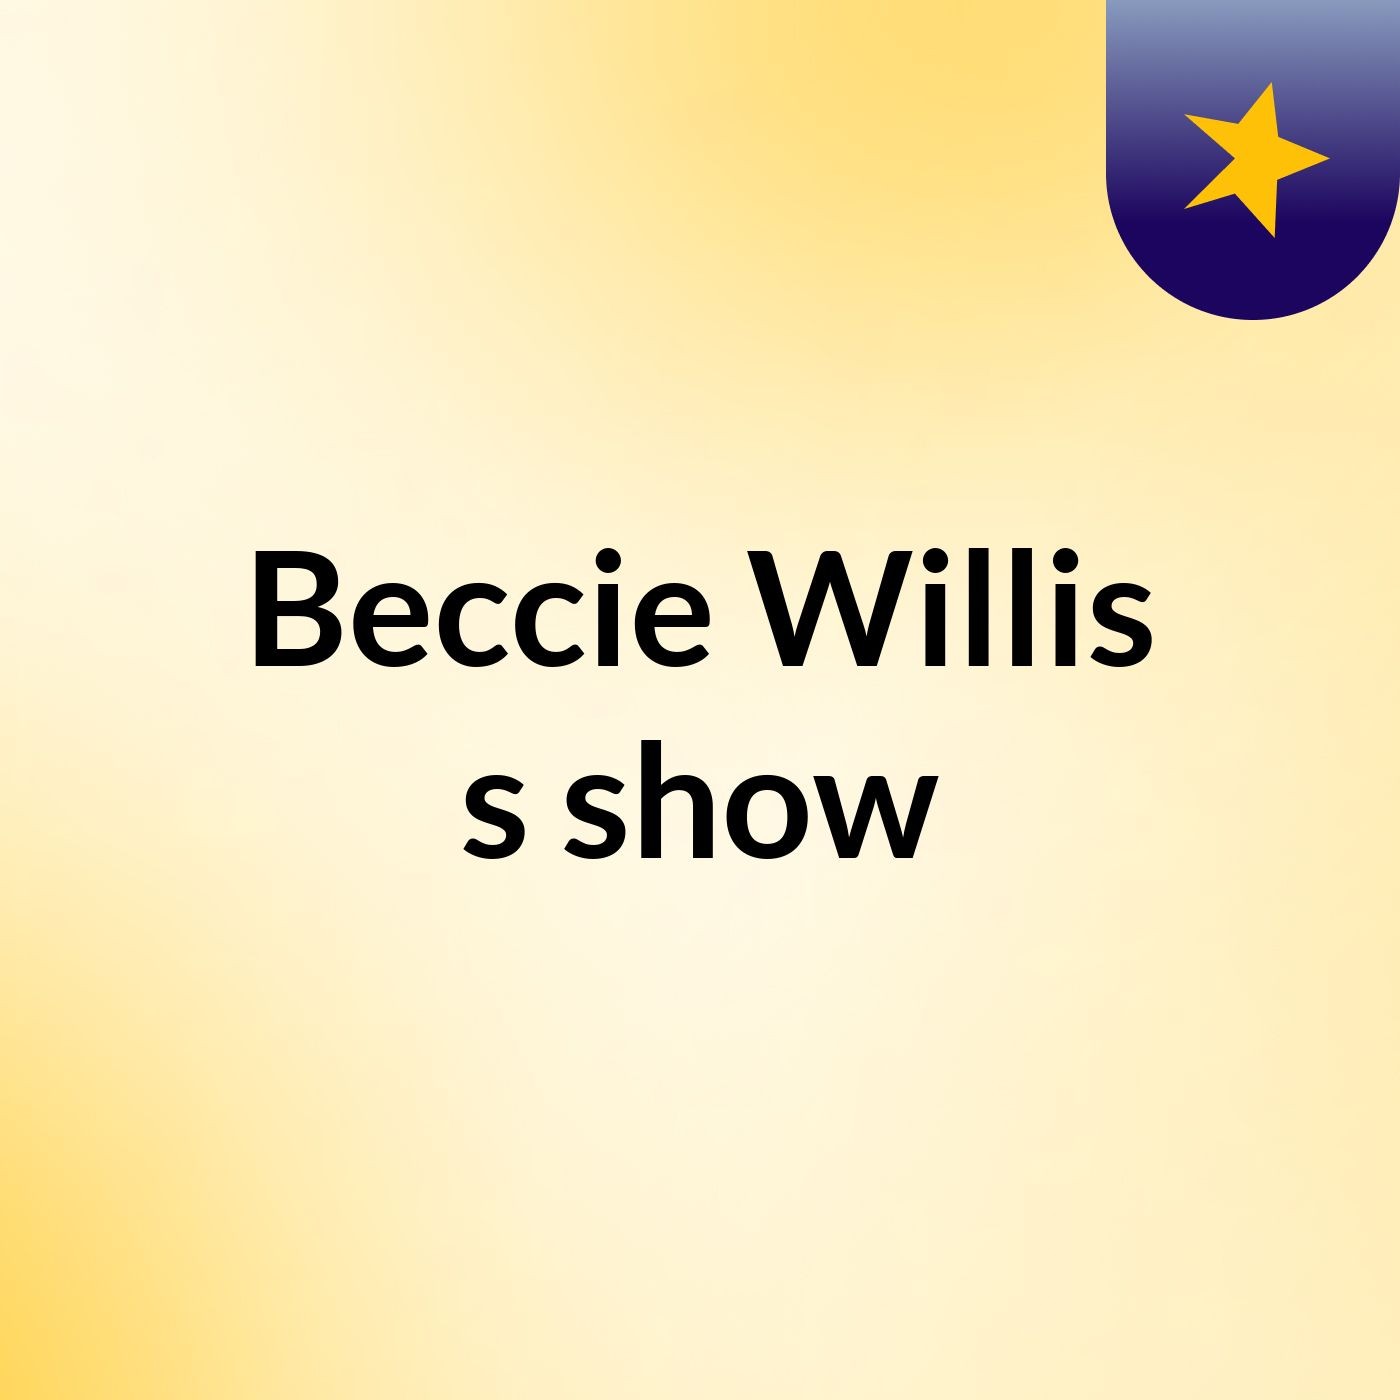 Beccie Willis's show